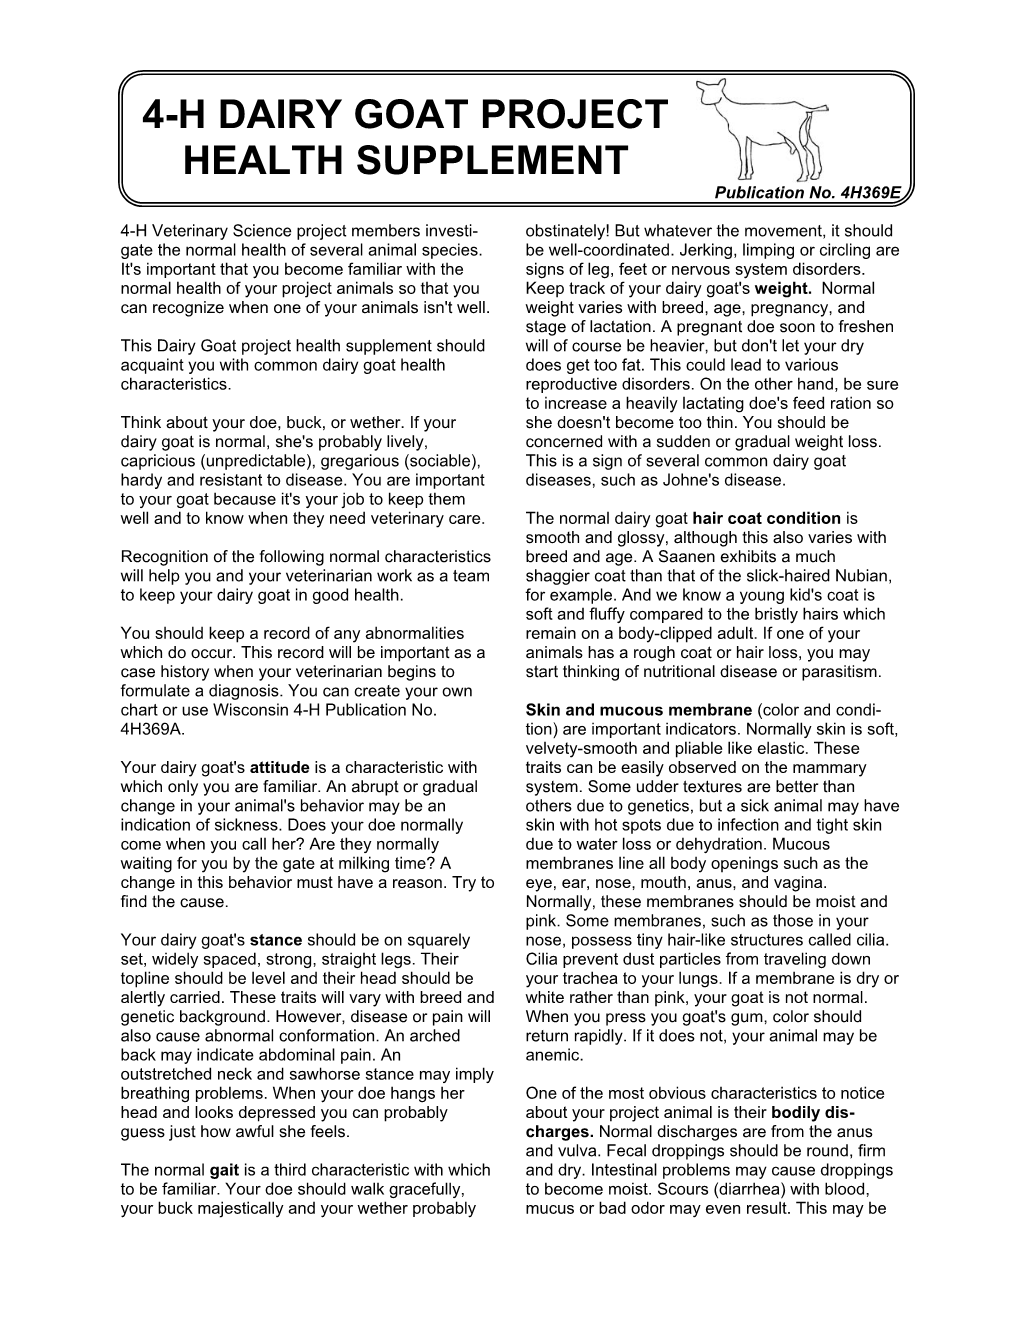 4-H DAIRY GOAT PROJECT HEALTH SUPPLEMENT Publication No